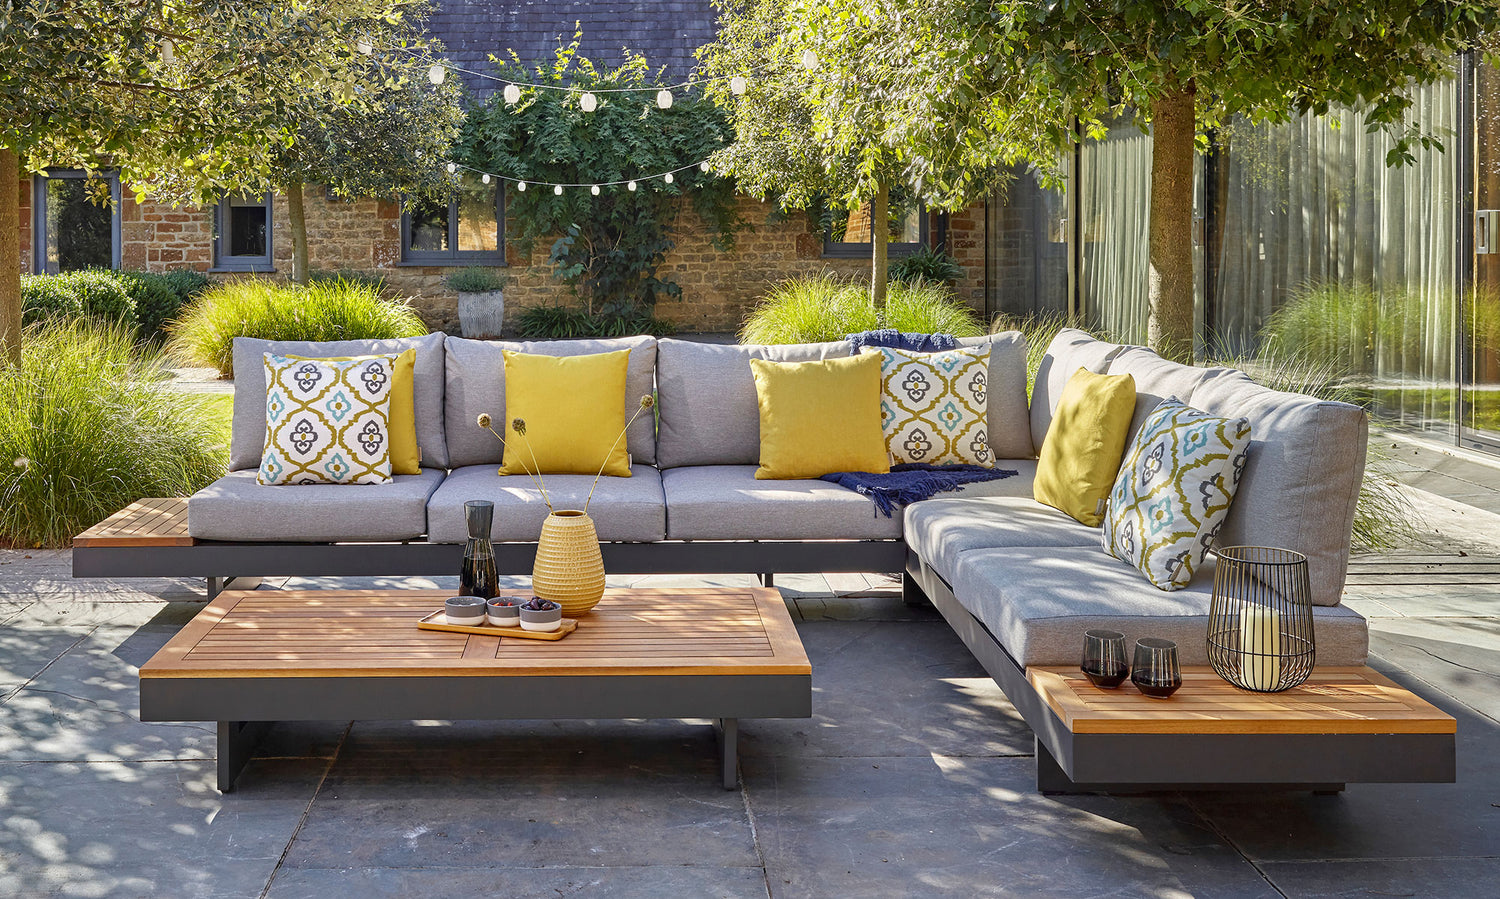 How to find the best garden furniture